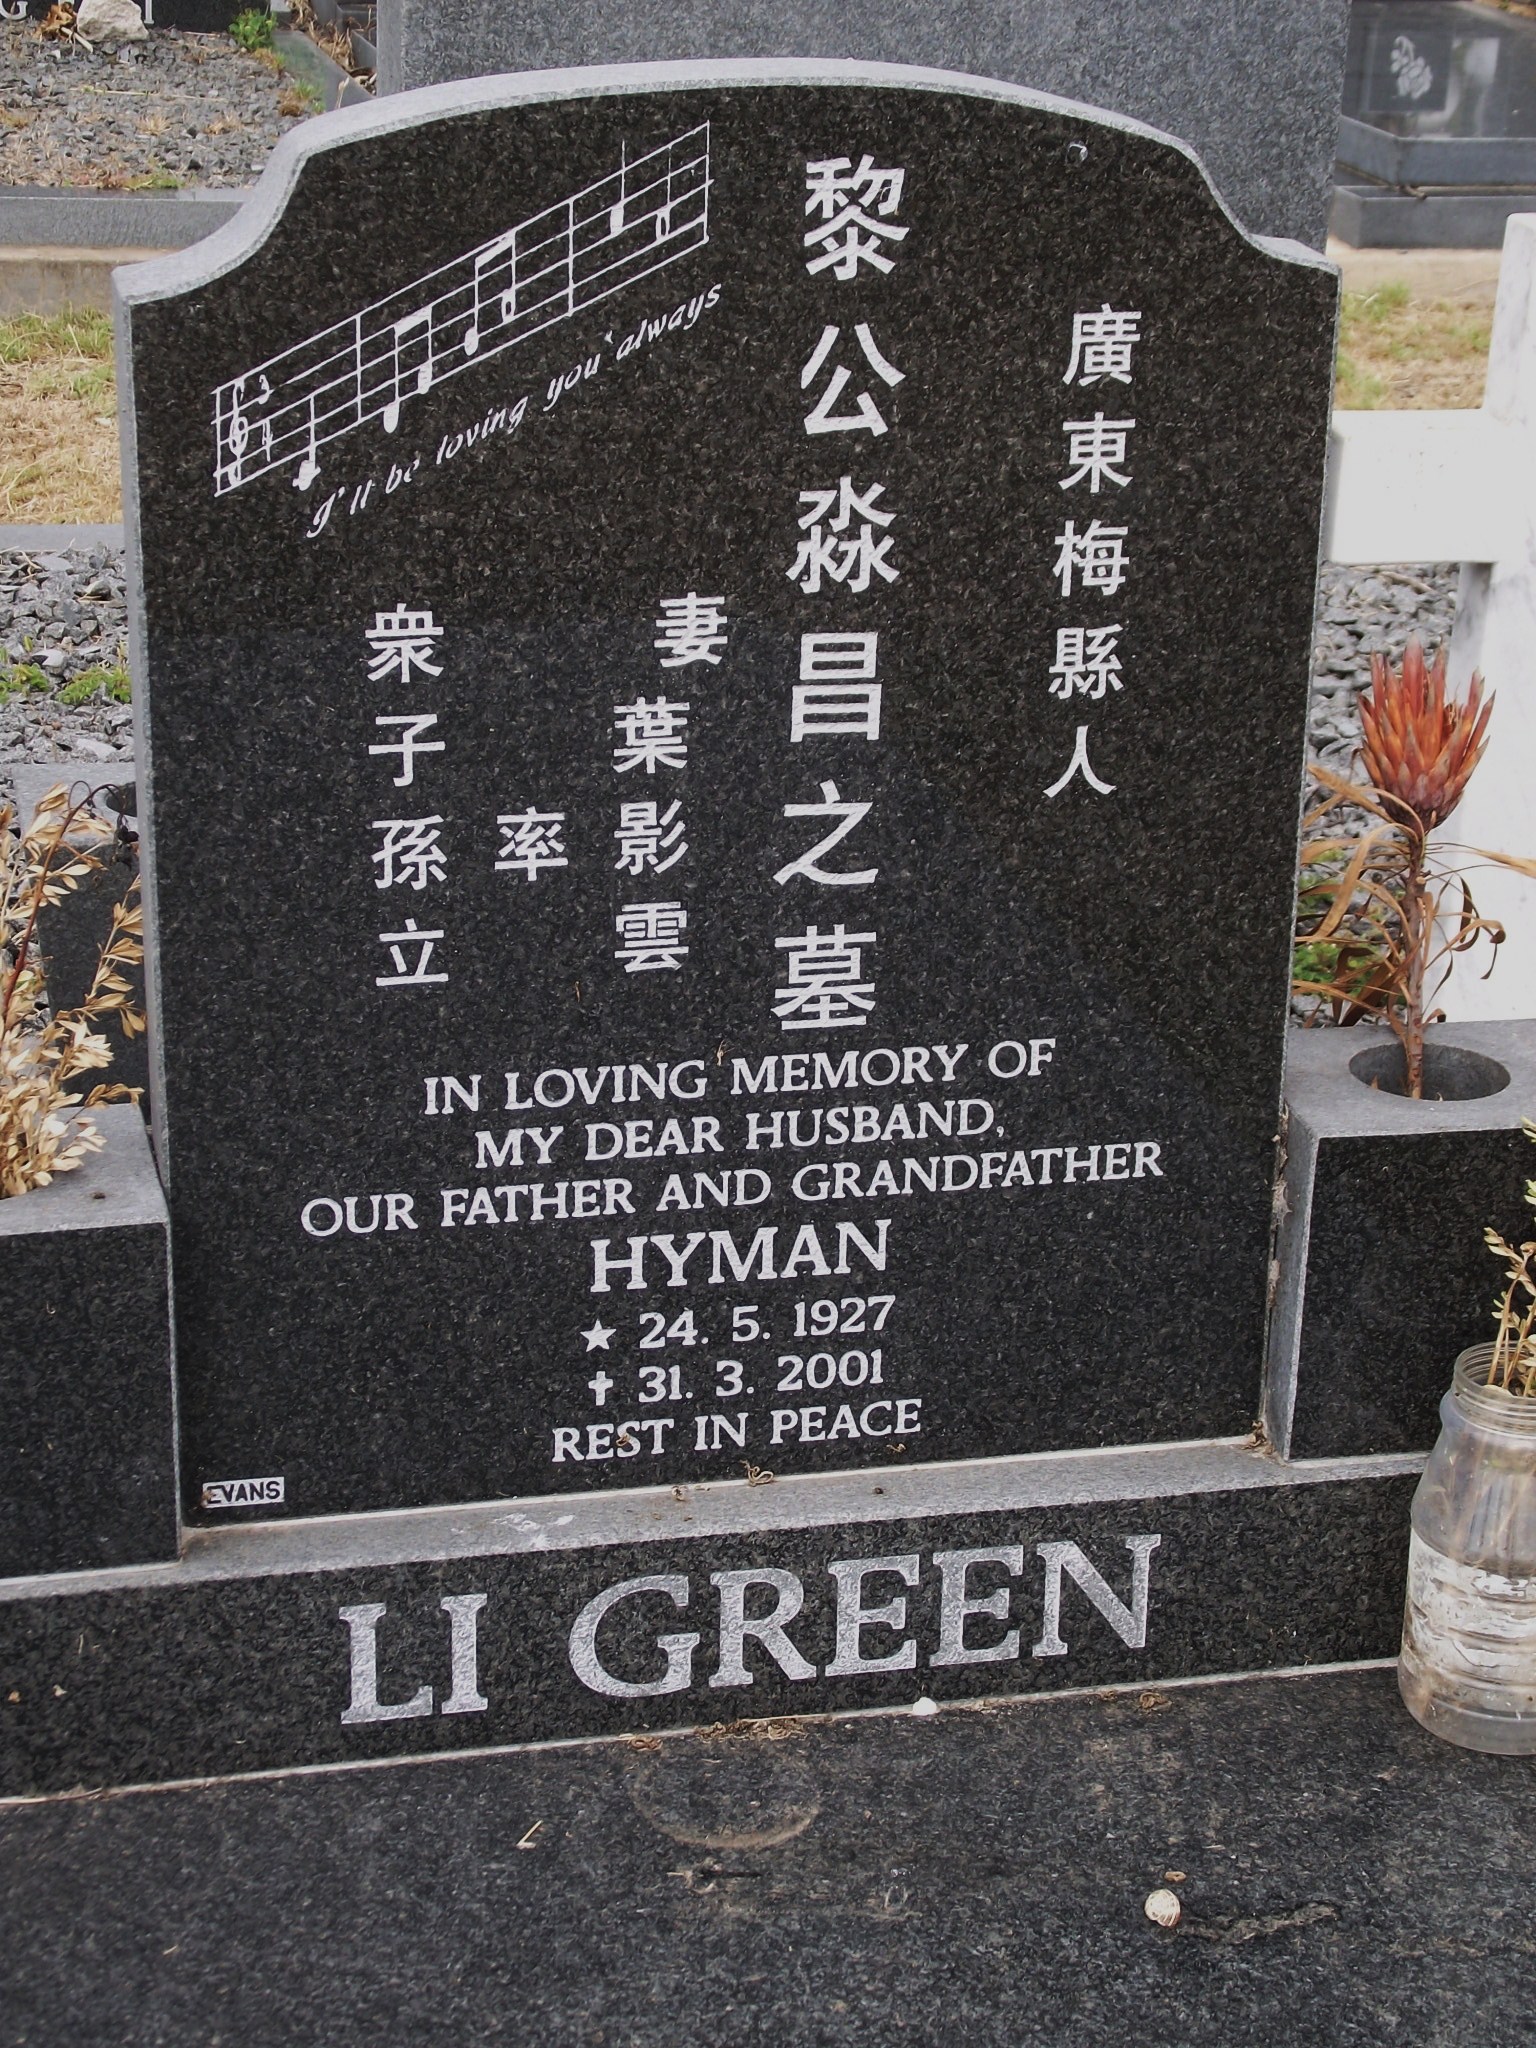 LI GREEN Hyman 1927-2001